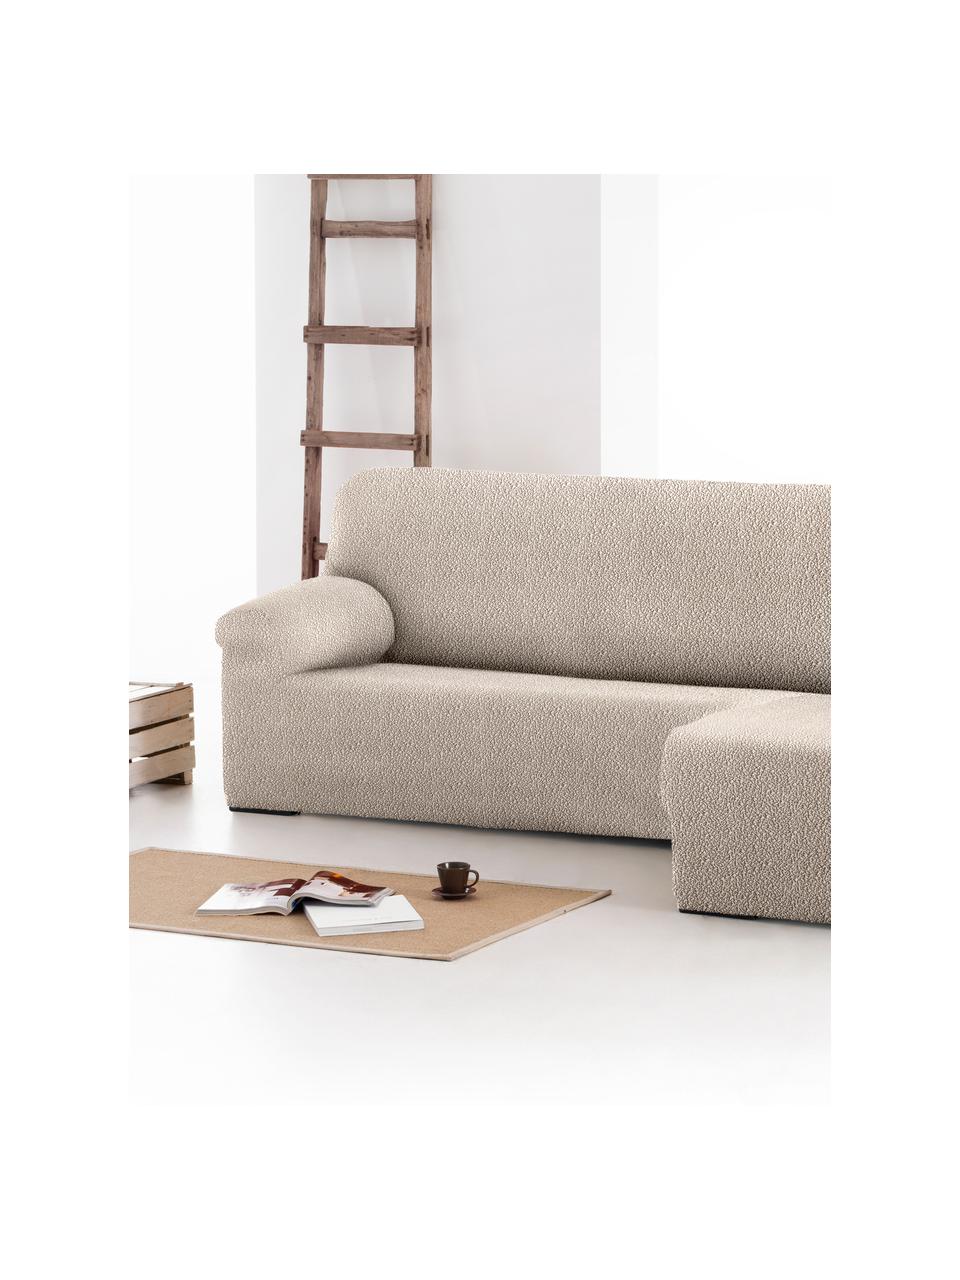 Funda de sofá rinconero Roc, 55% poliéster, 35% algodón, 10% elastómero, Crema, An 360 x F 180 cm, chaise longue derecha